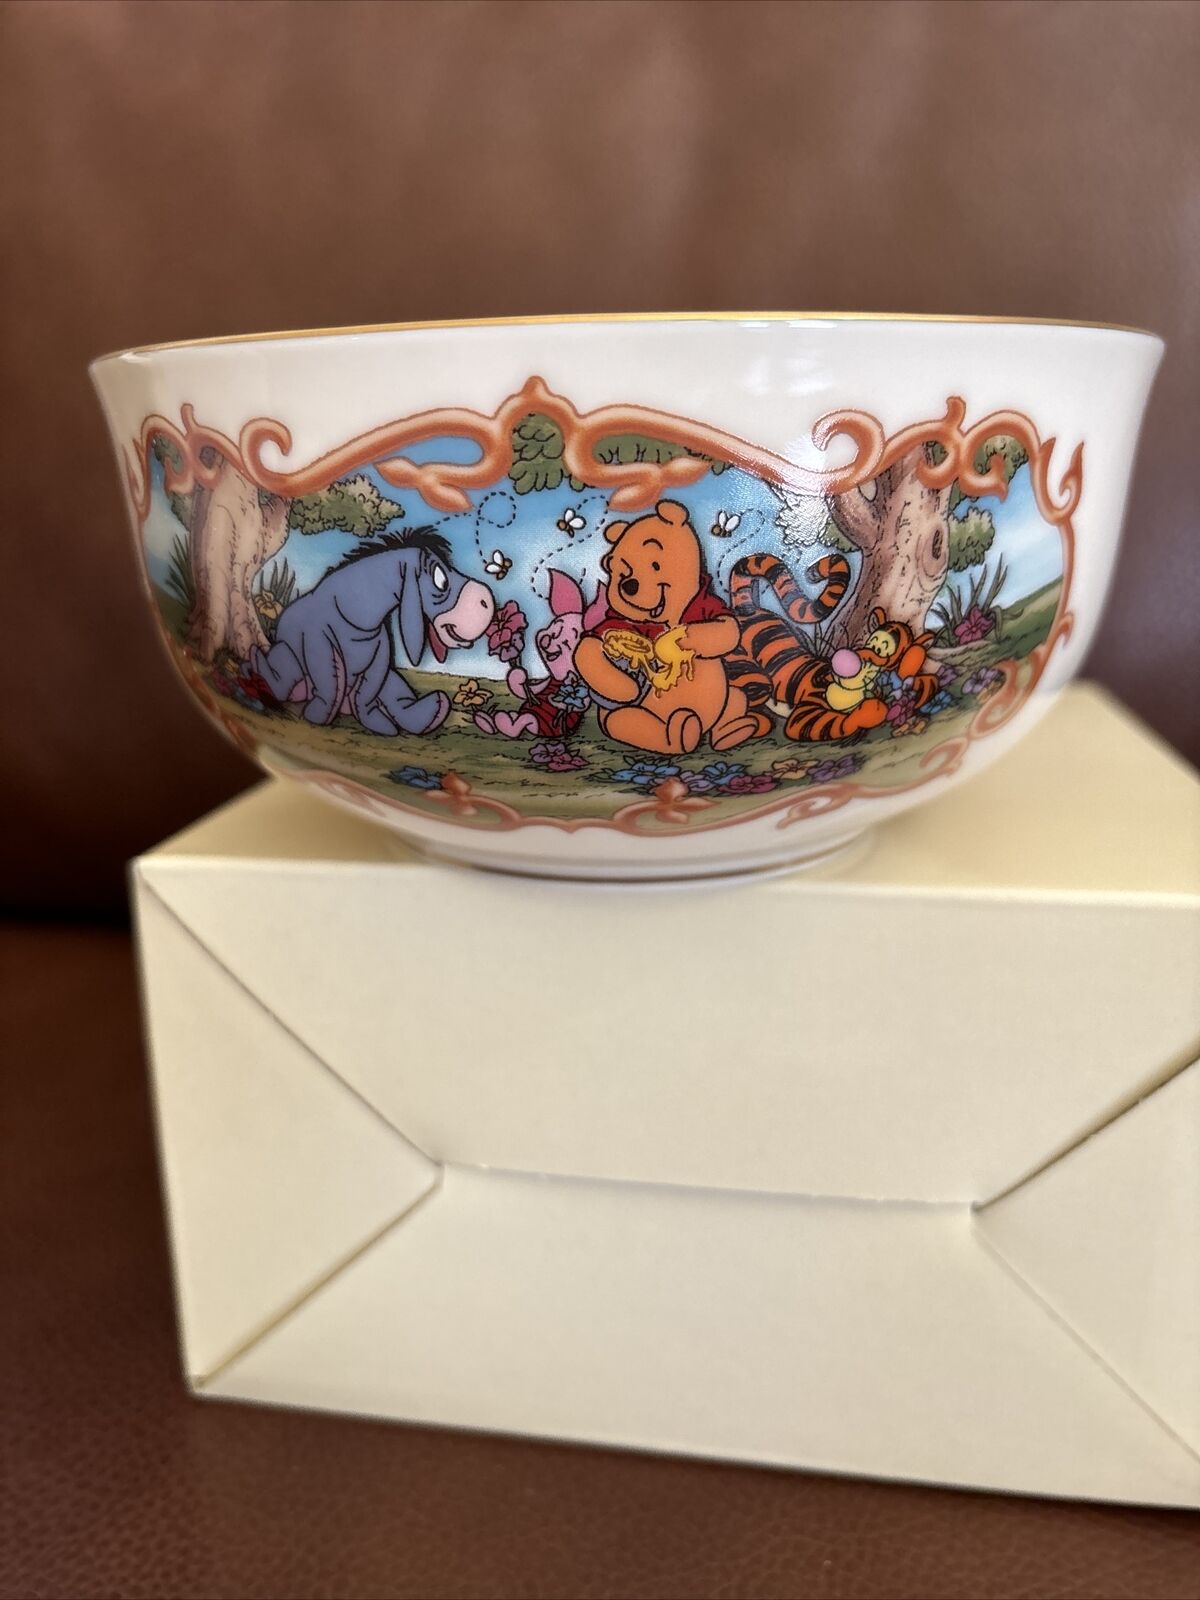 2000 Lenox China Colorful Disney Animated Classics “WINNIE POOH” Bowl NIB